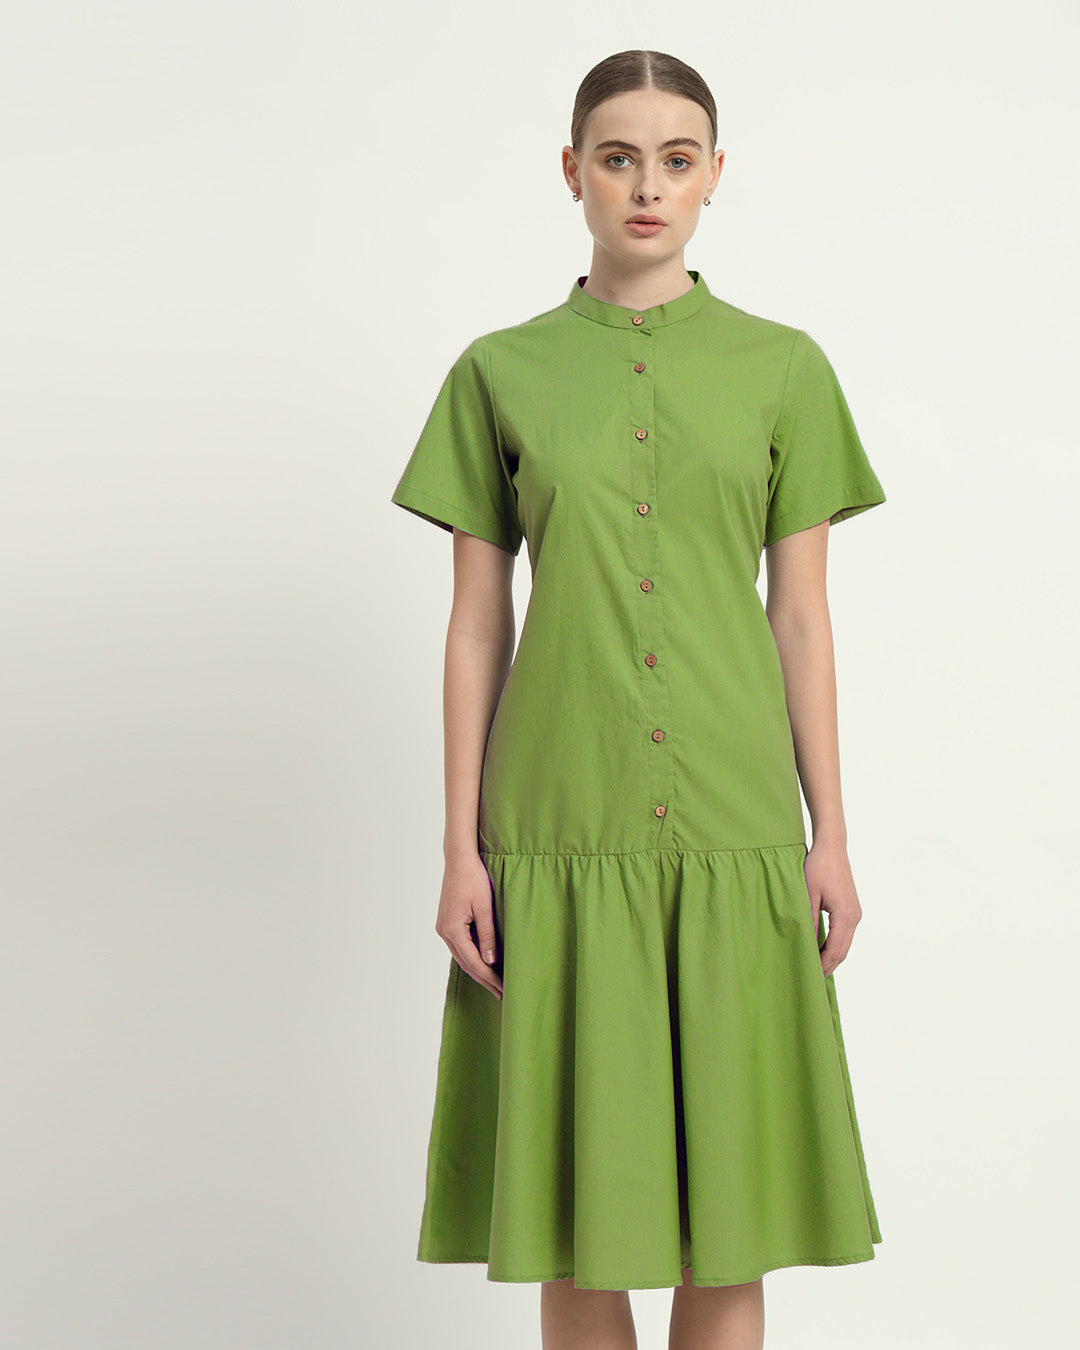 The Fern Melrose Cotton Dress